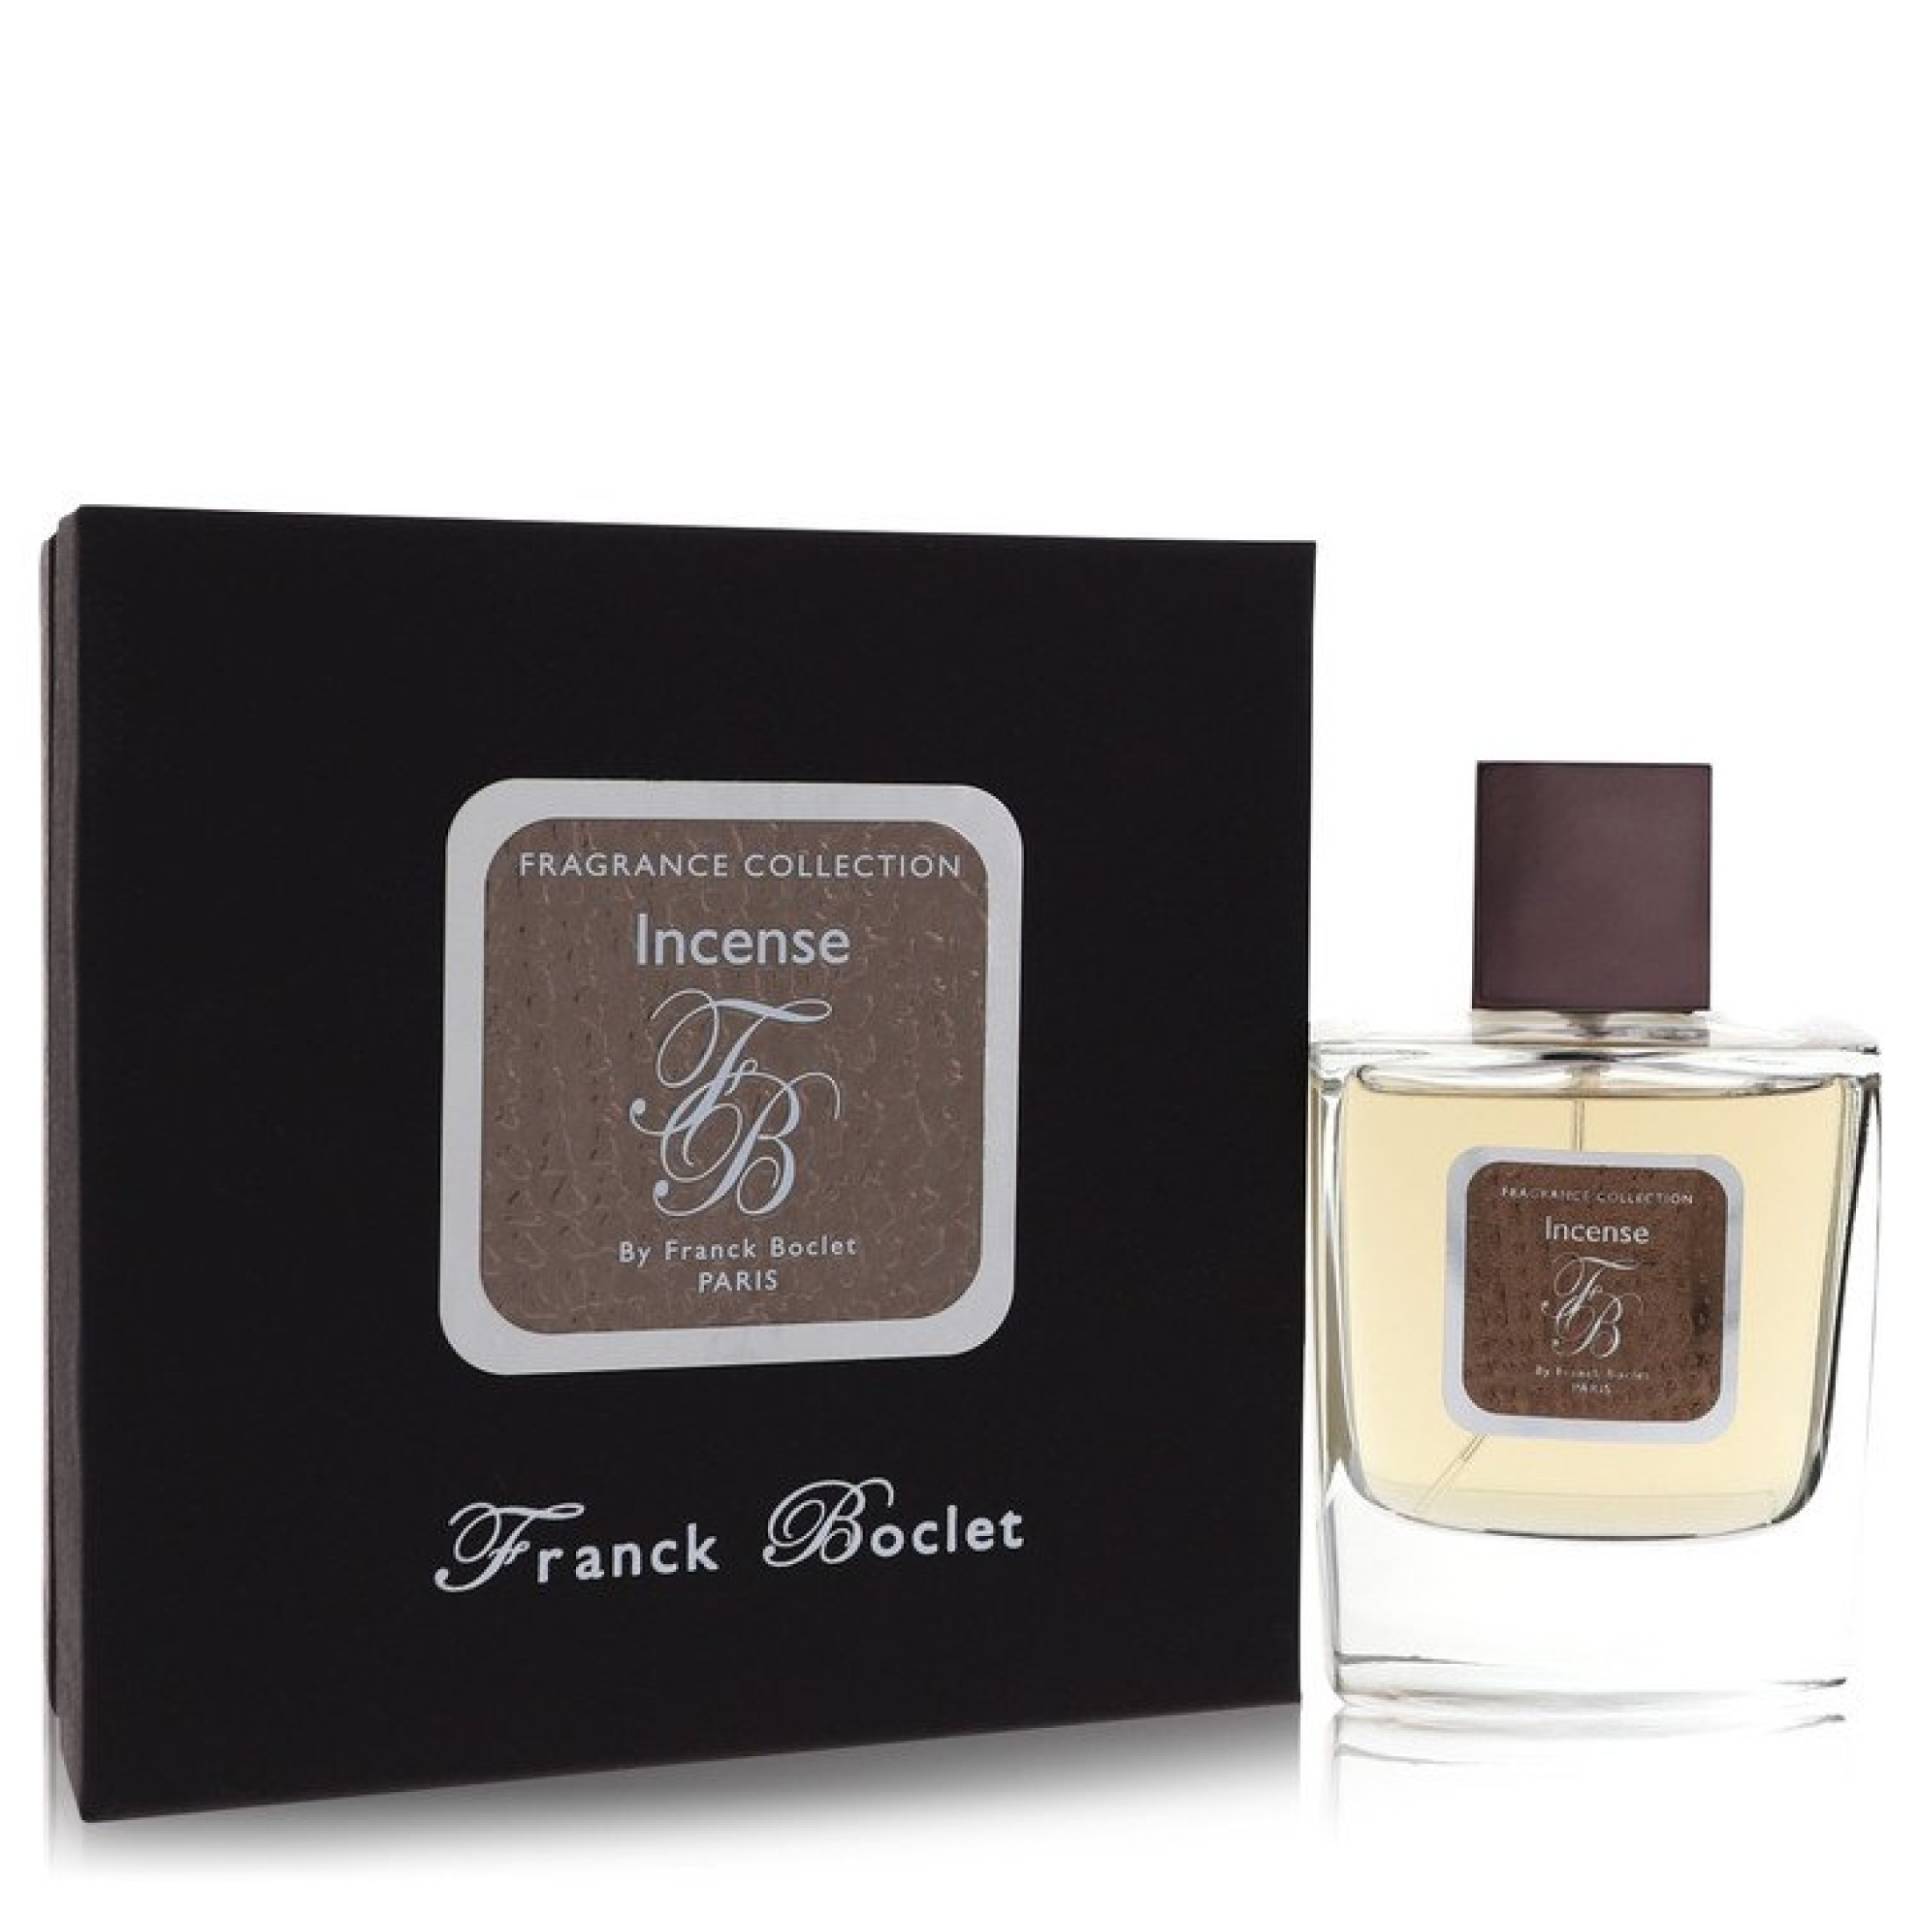 Franck Boclet Incense Eau De Parfum Spray 100 ml von Franck Boclet